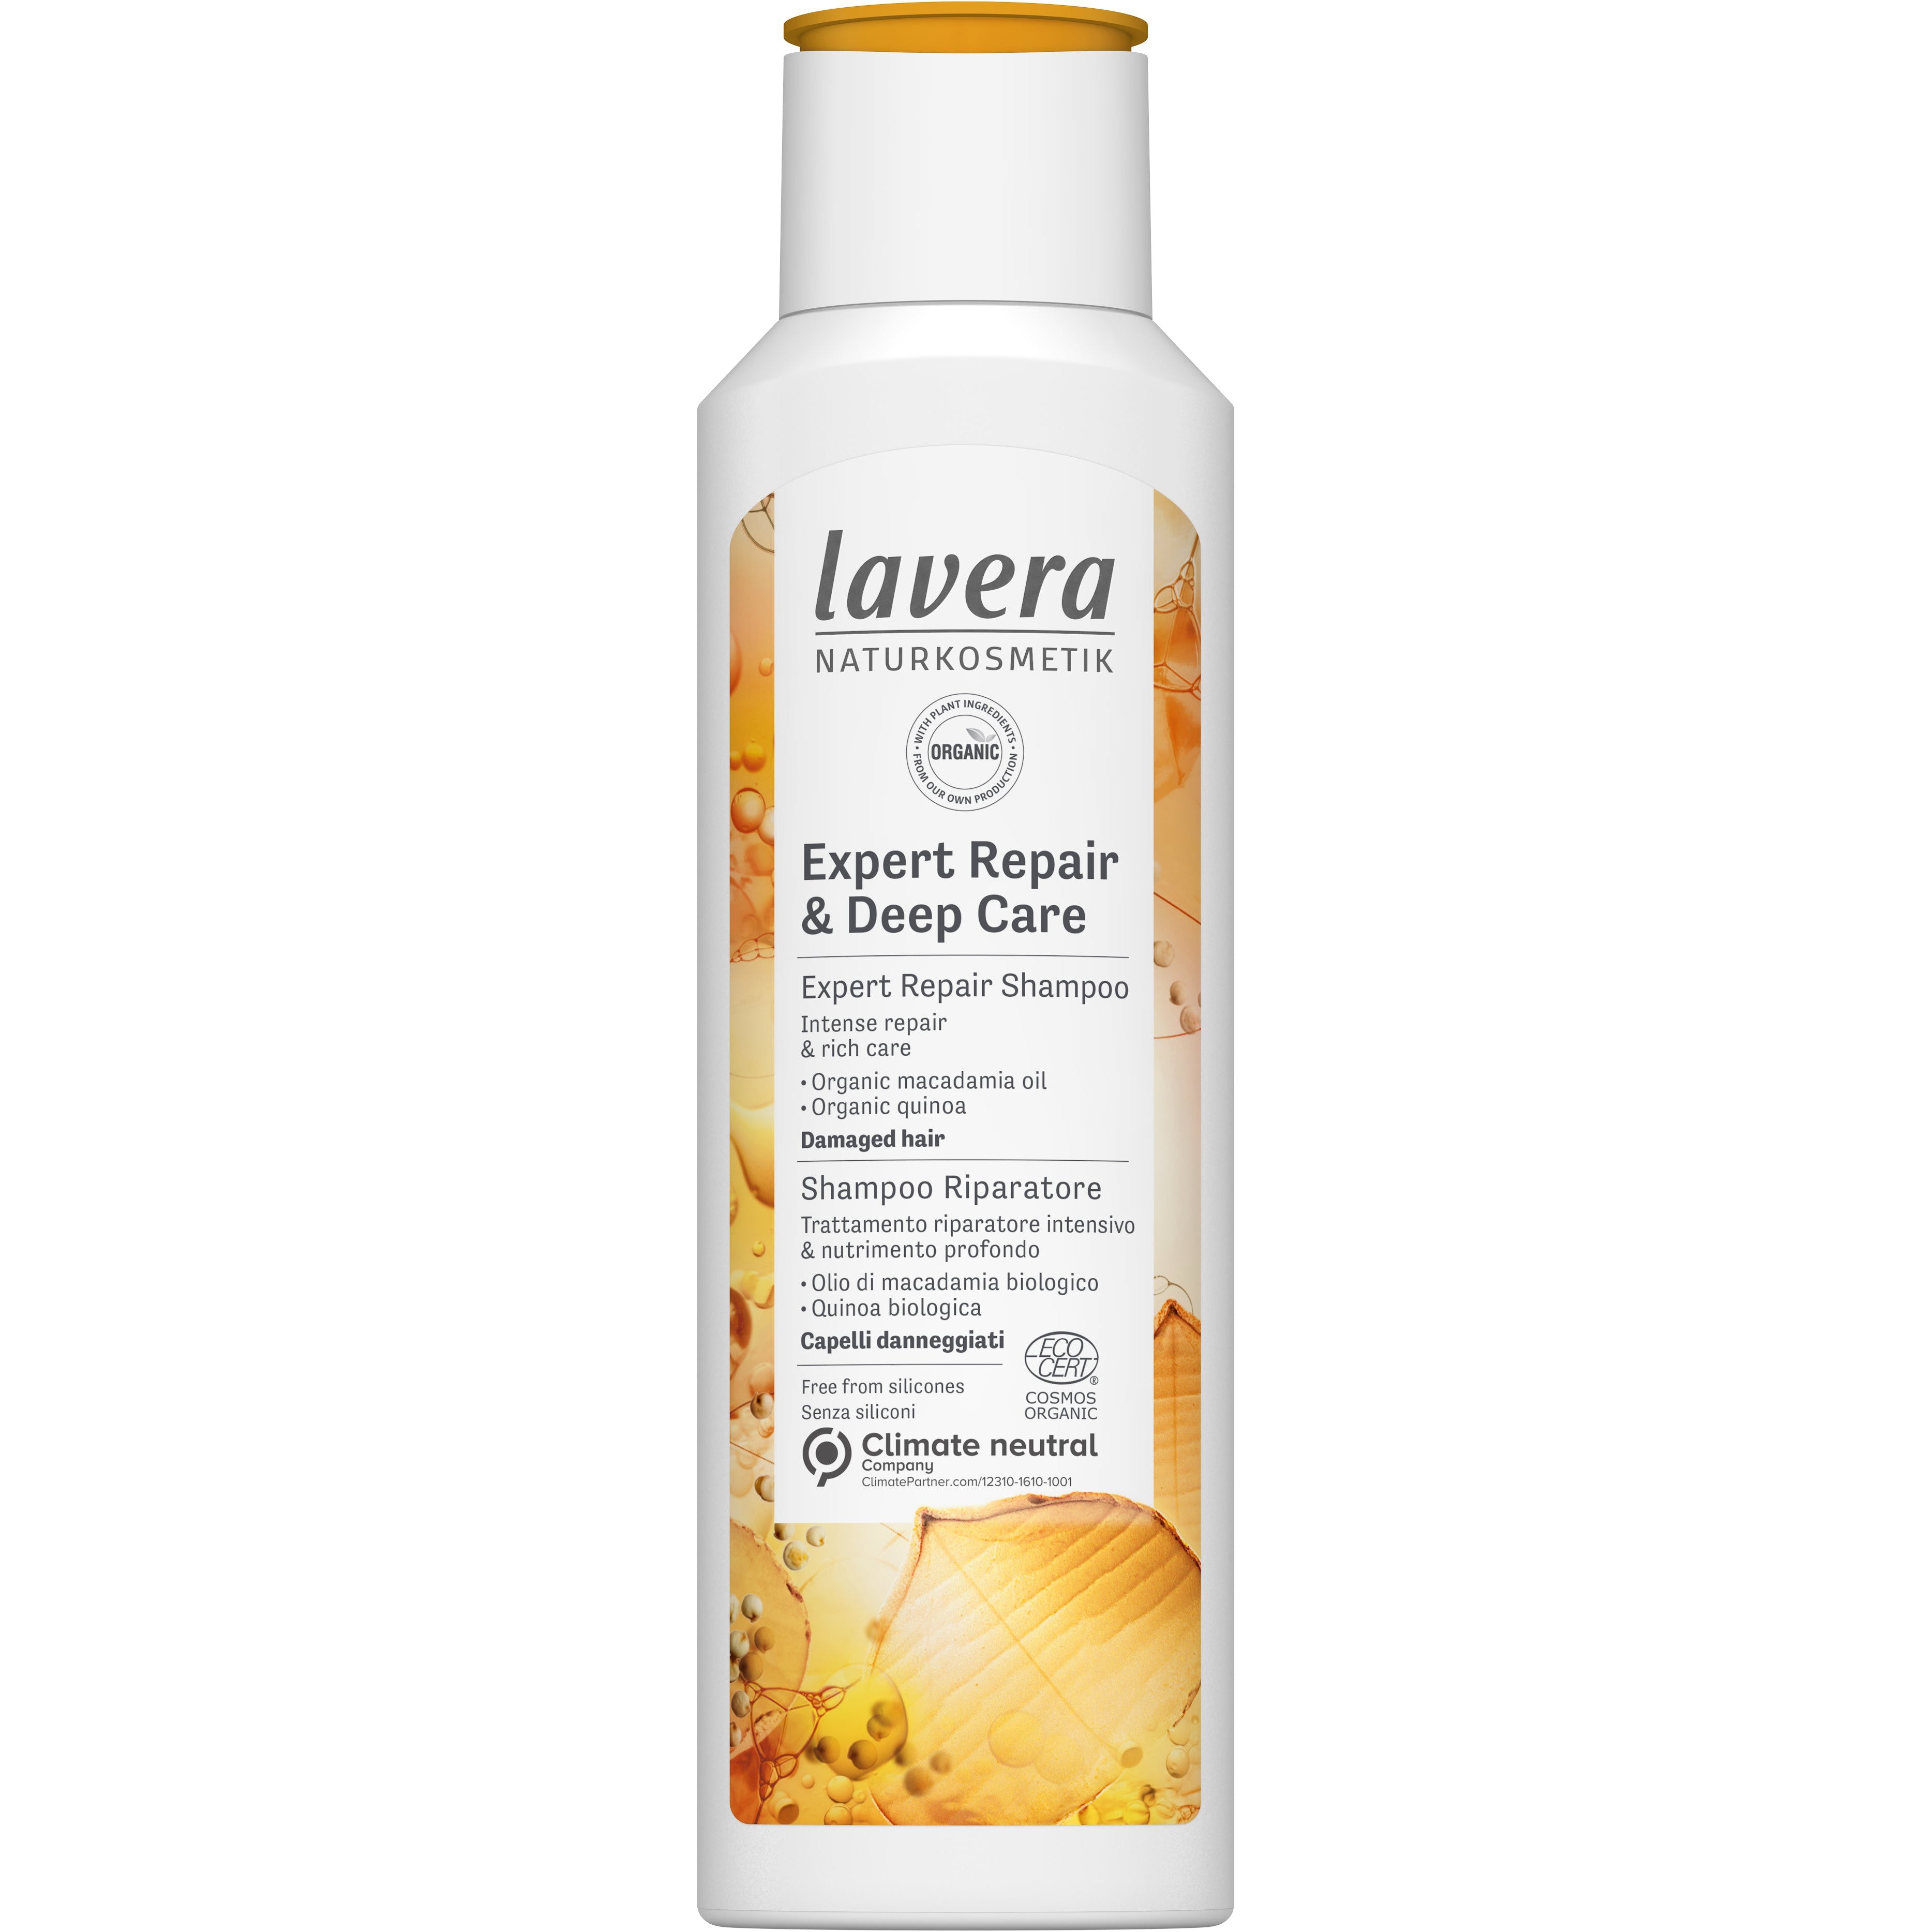 Lavera Expert Repair & Deep Care shampoo